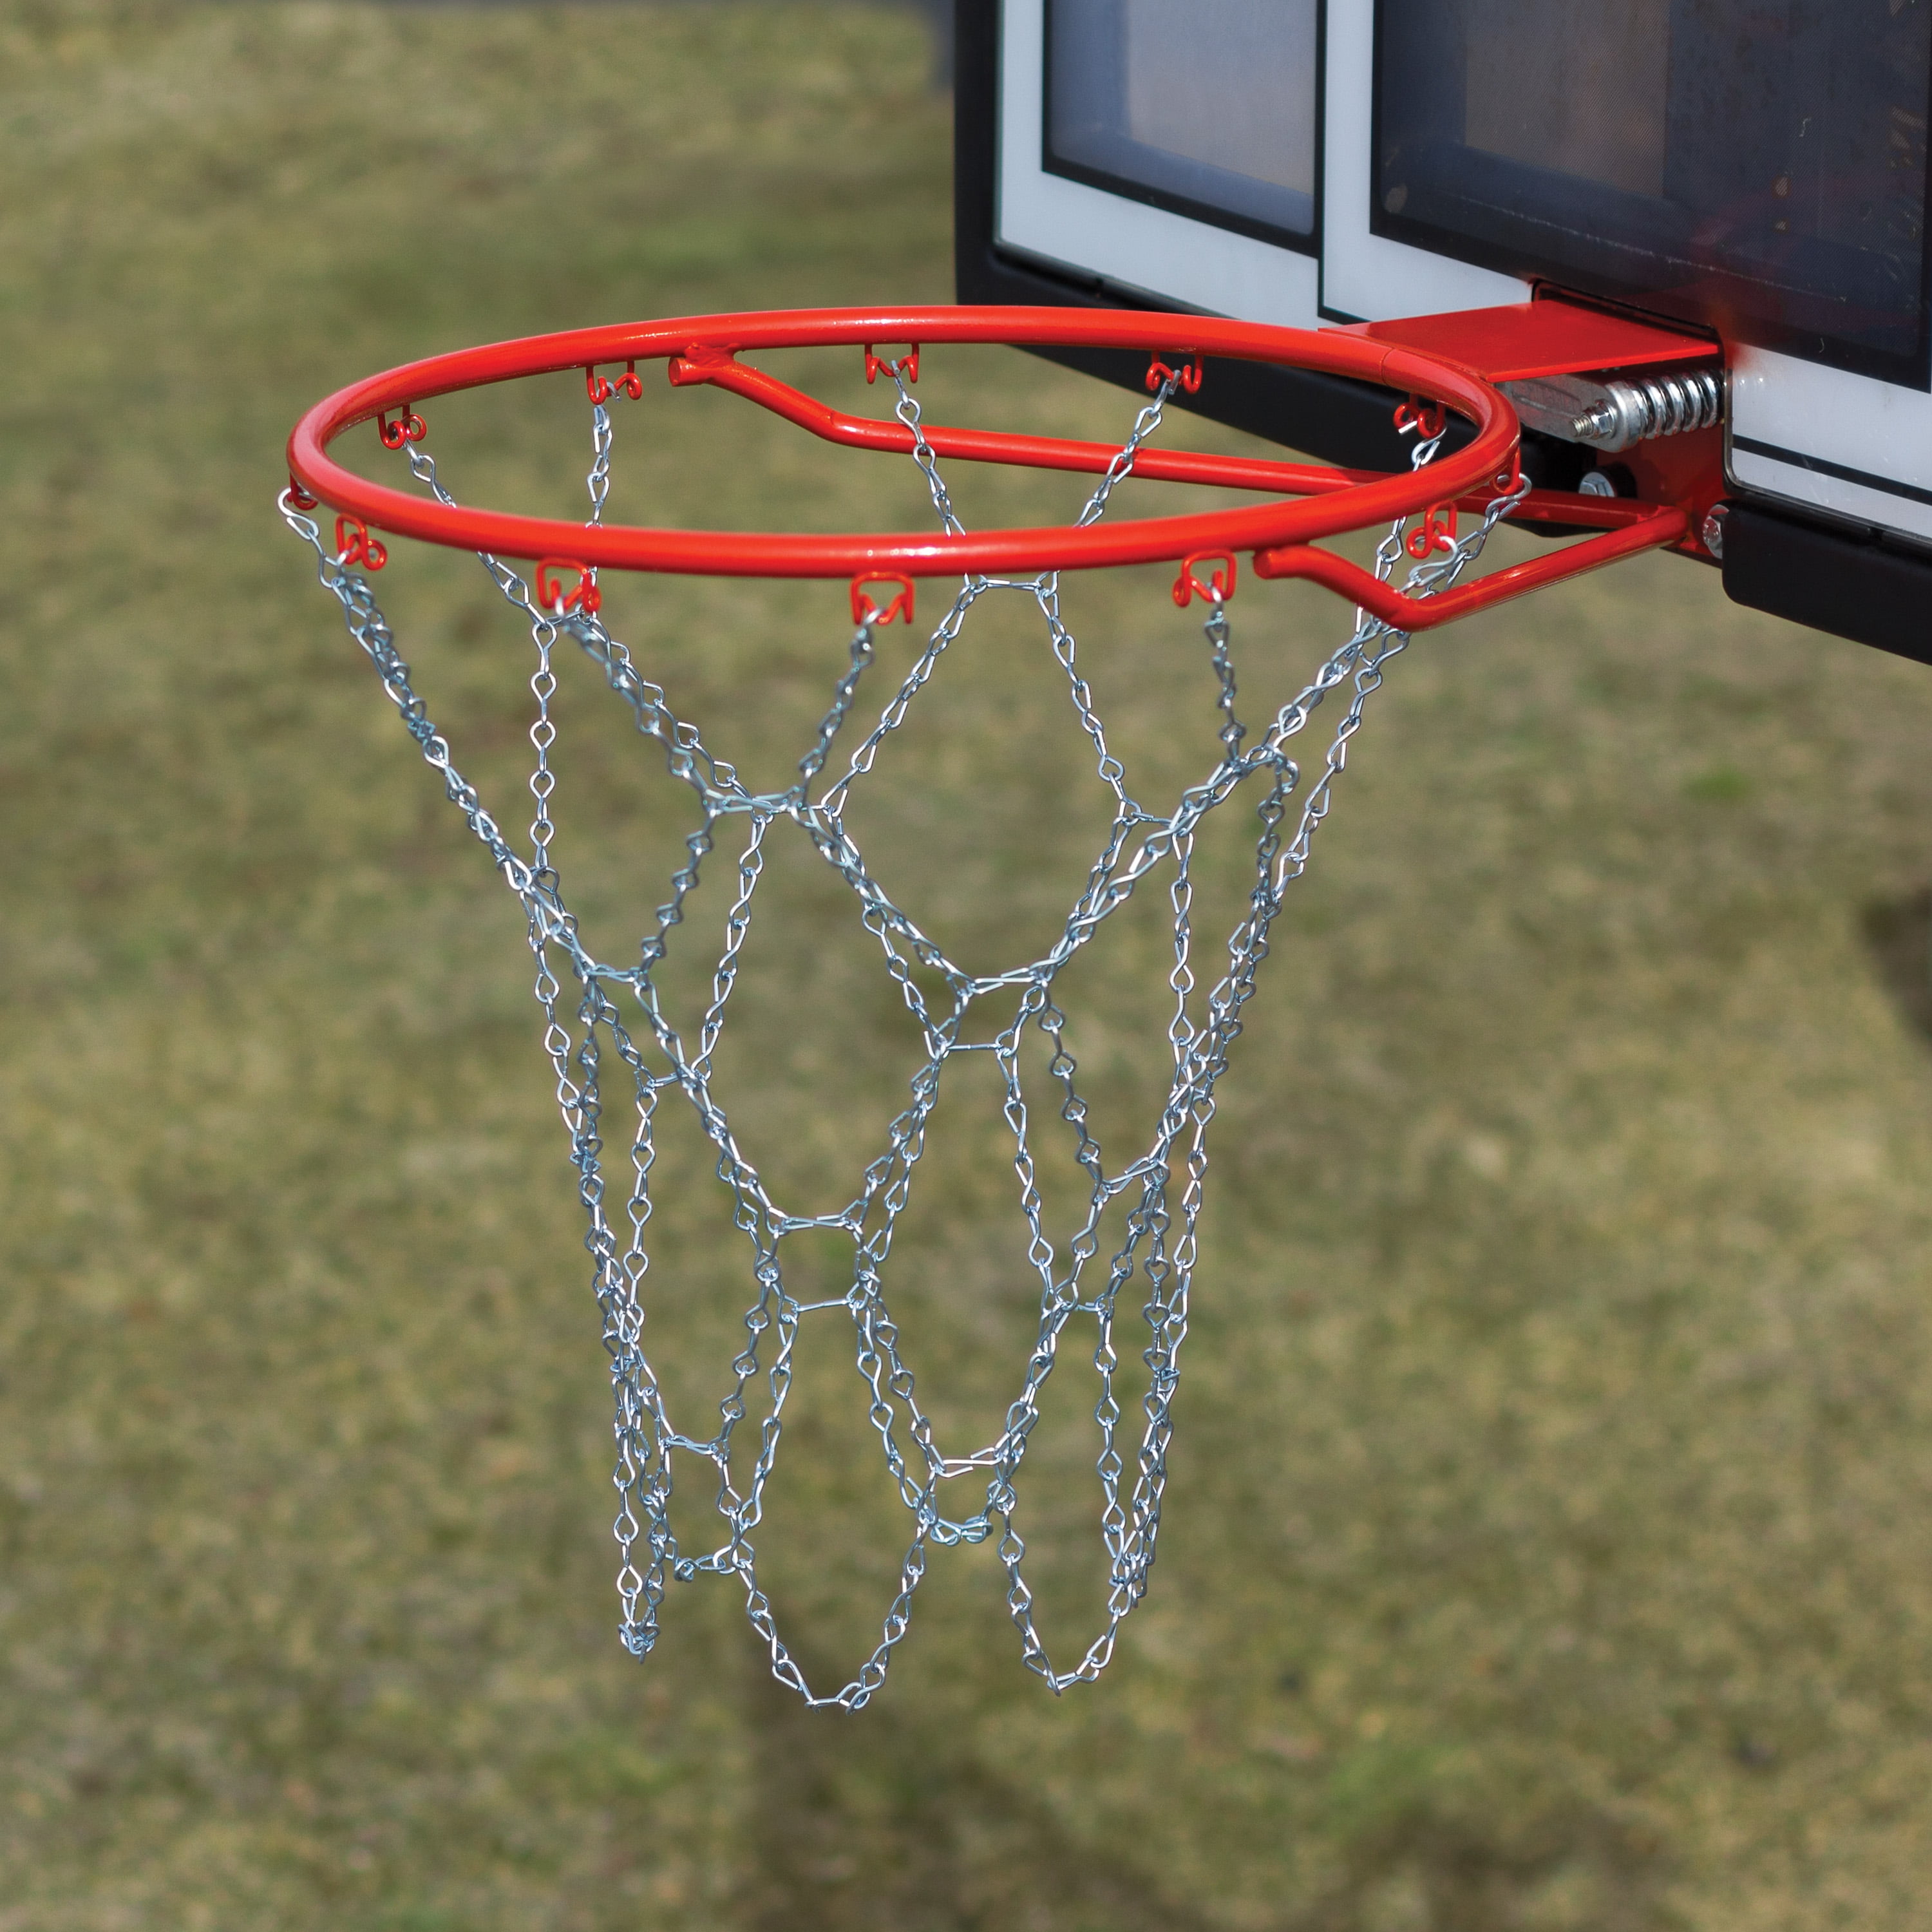 USA Basketball Hoop Net Glow in the Dark Outdoor Shoot Training Heavy Duty Game 